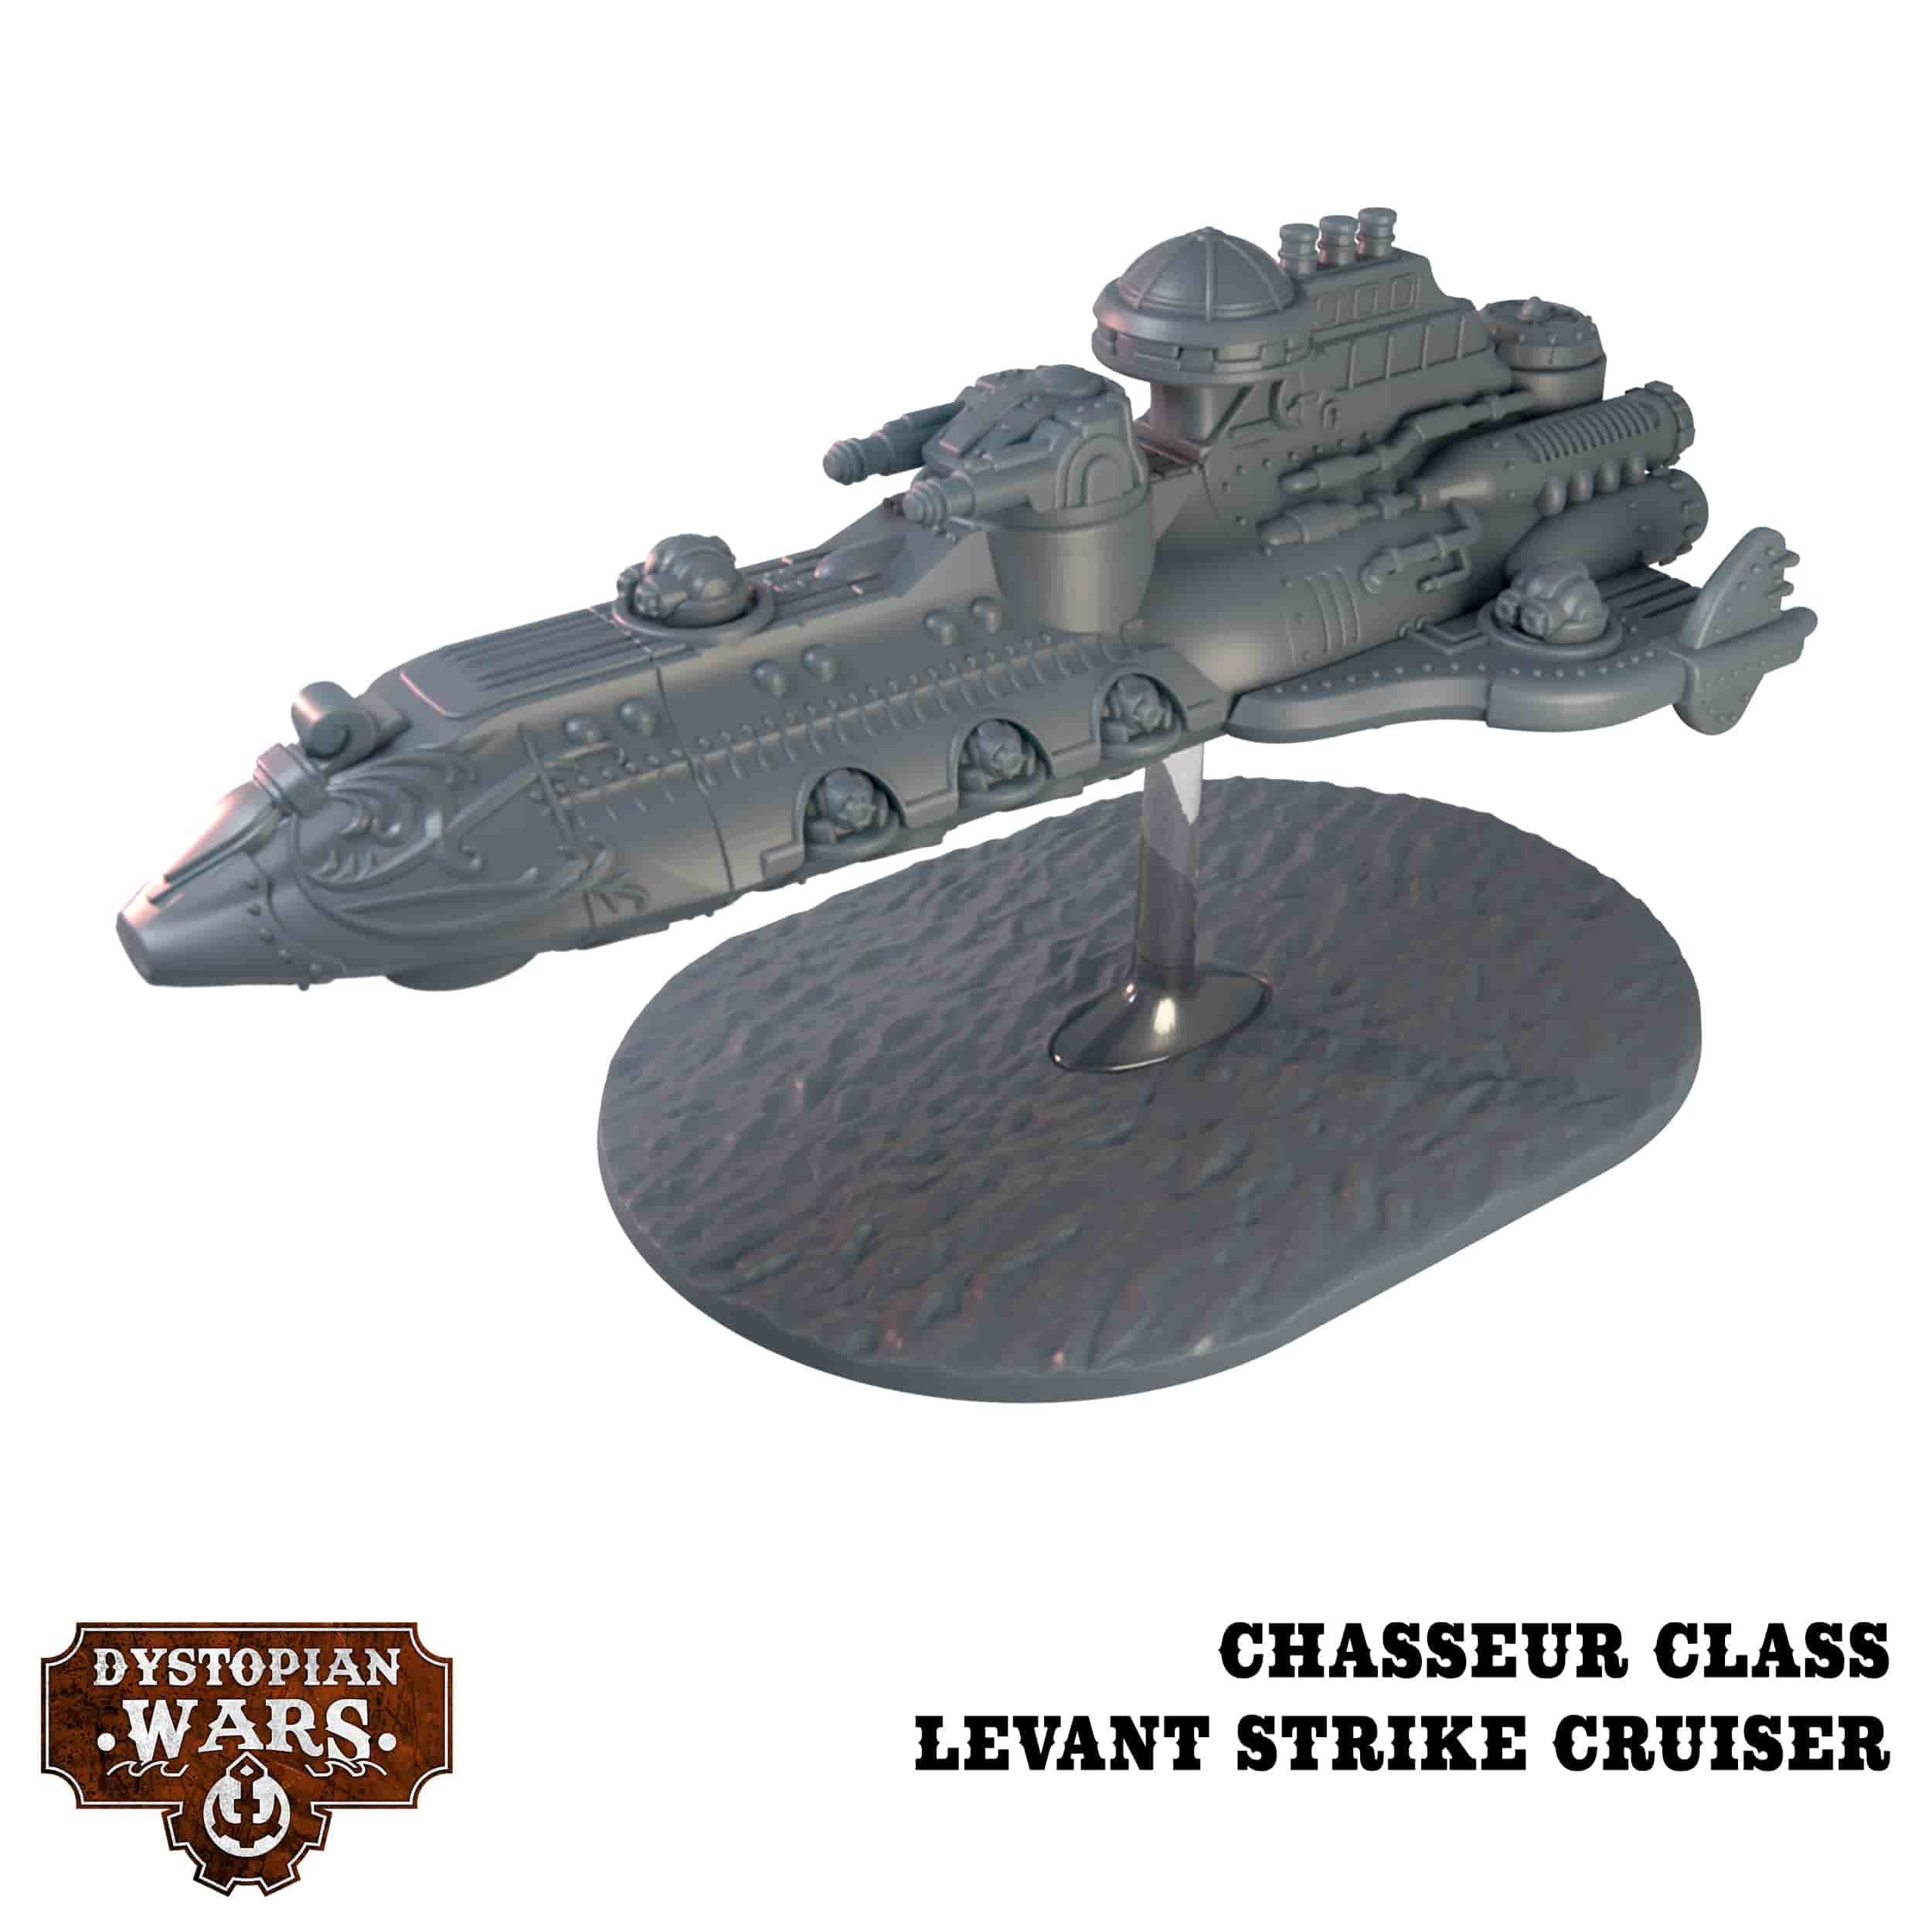 Chasseur Class Levant Strike Cruiser - Dystopian Wars